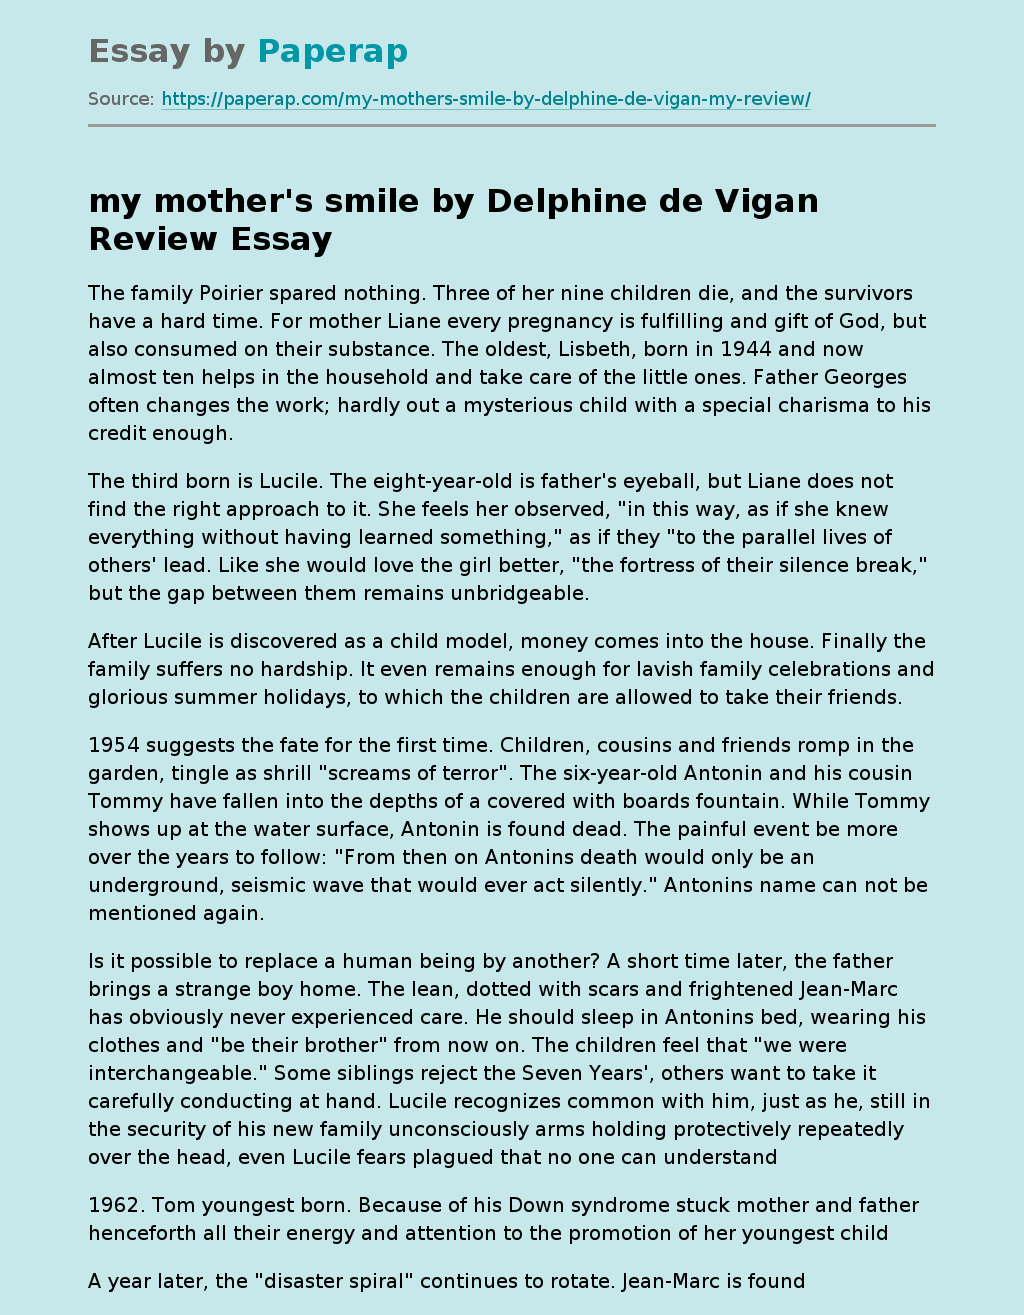 My Mother’s Smile by Delphine de Vigan